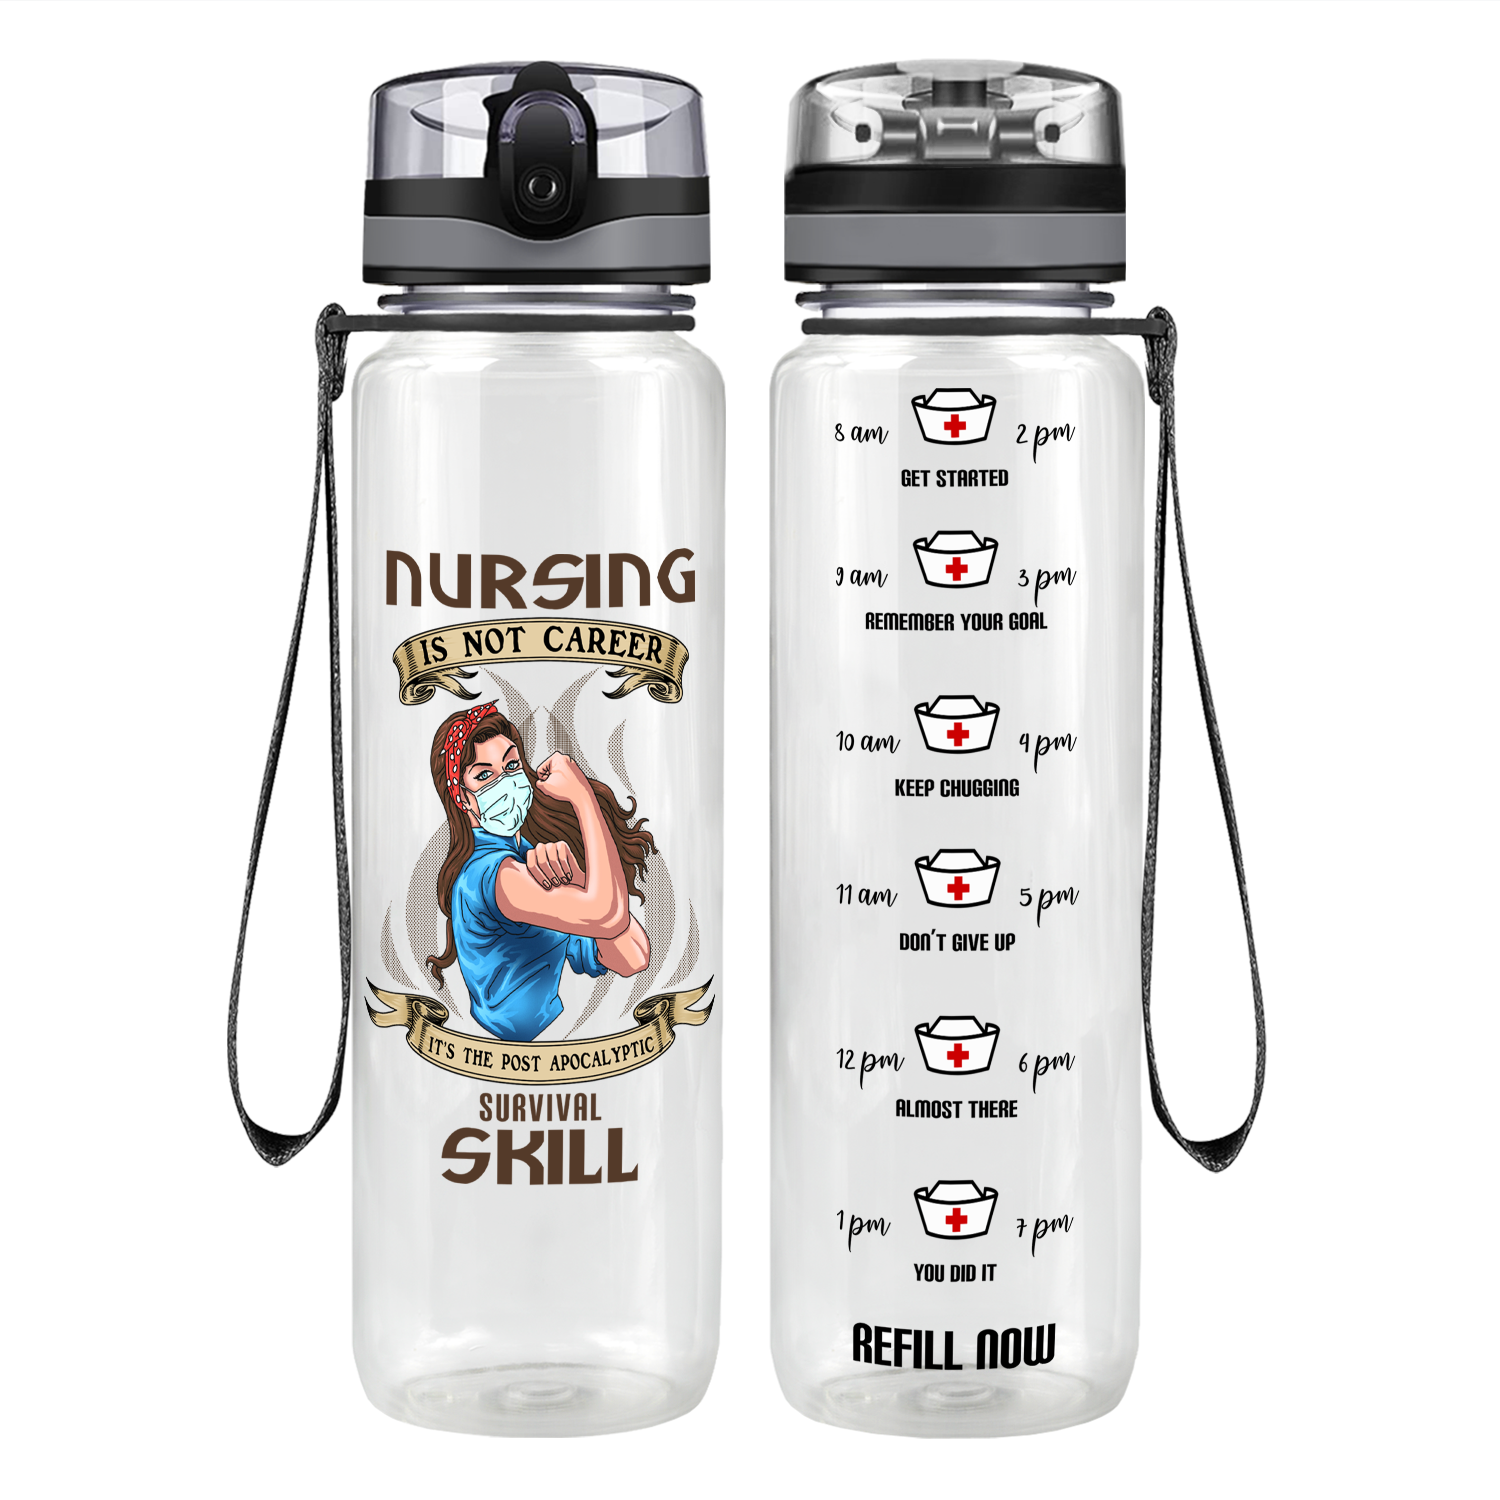 Survival Skill Motivational Tracking Water Bottle